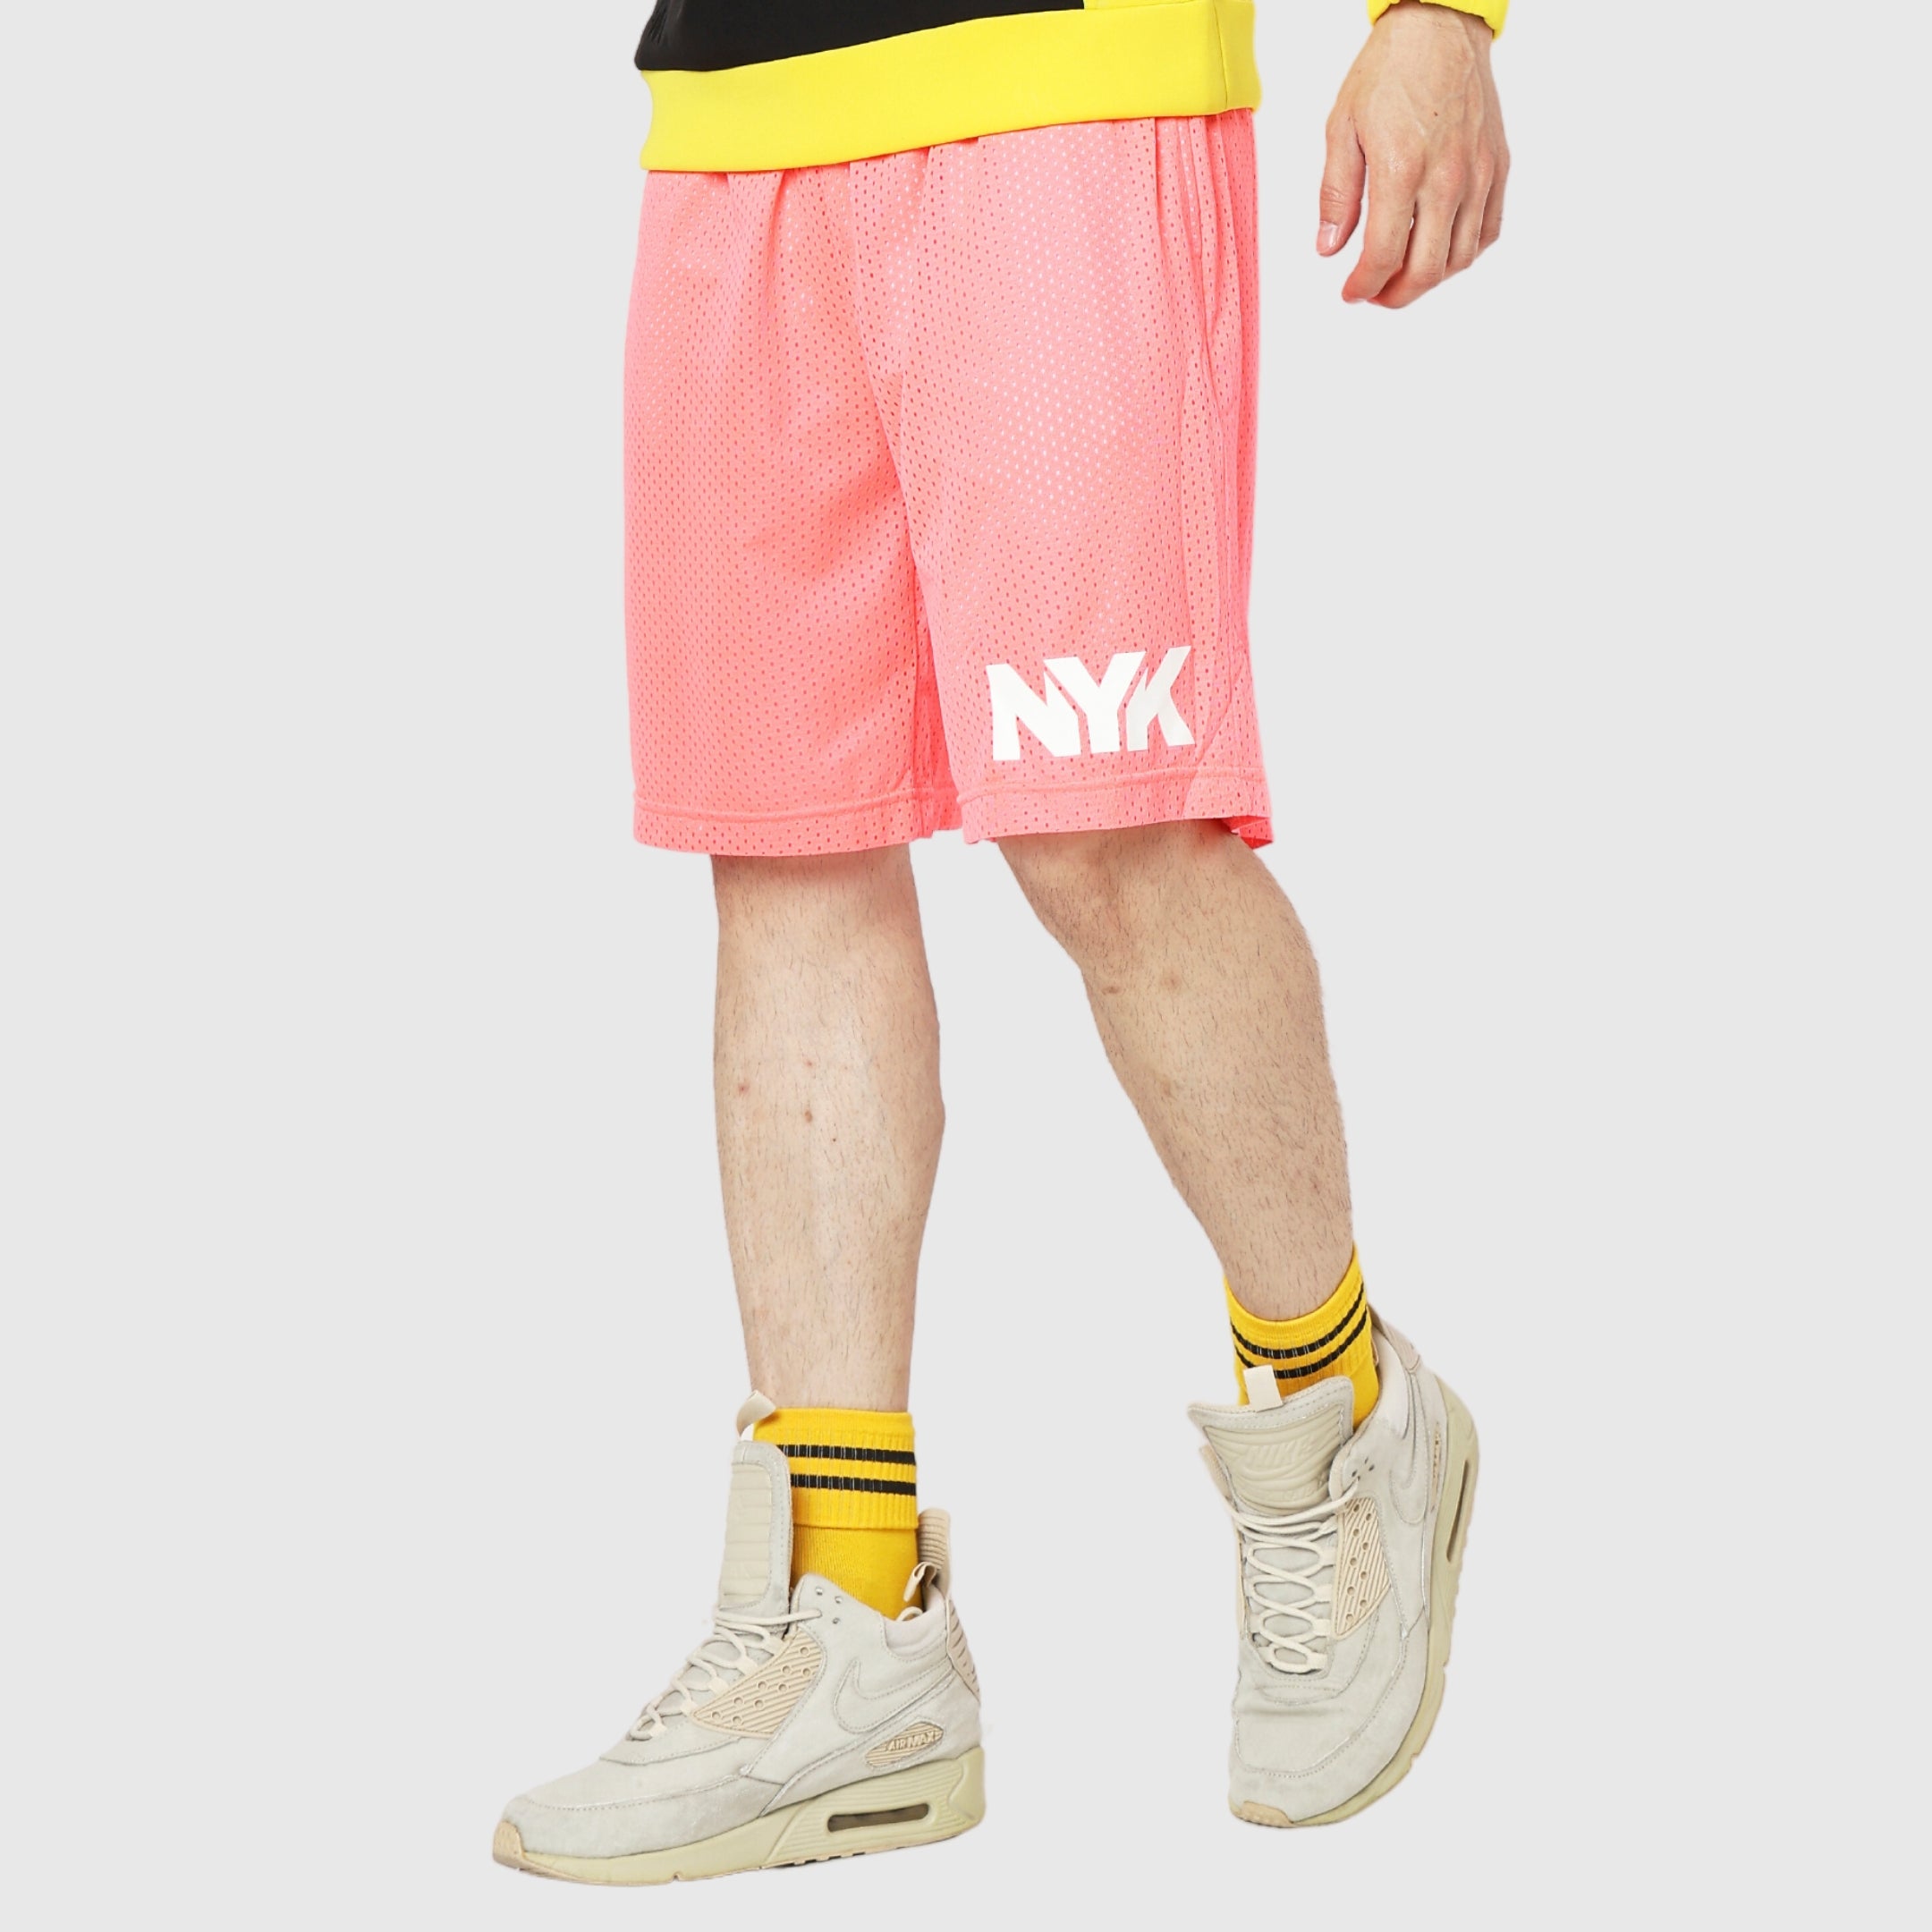 NYK Double-Layered Neon Training Shorts